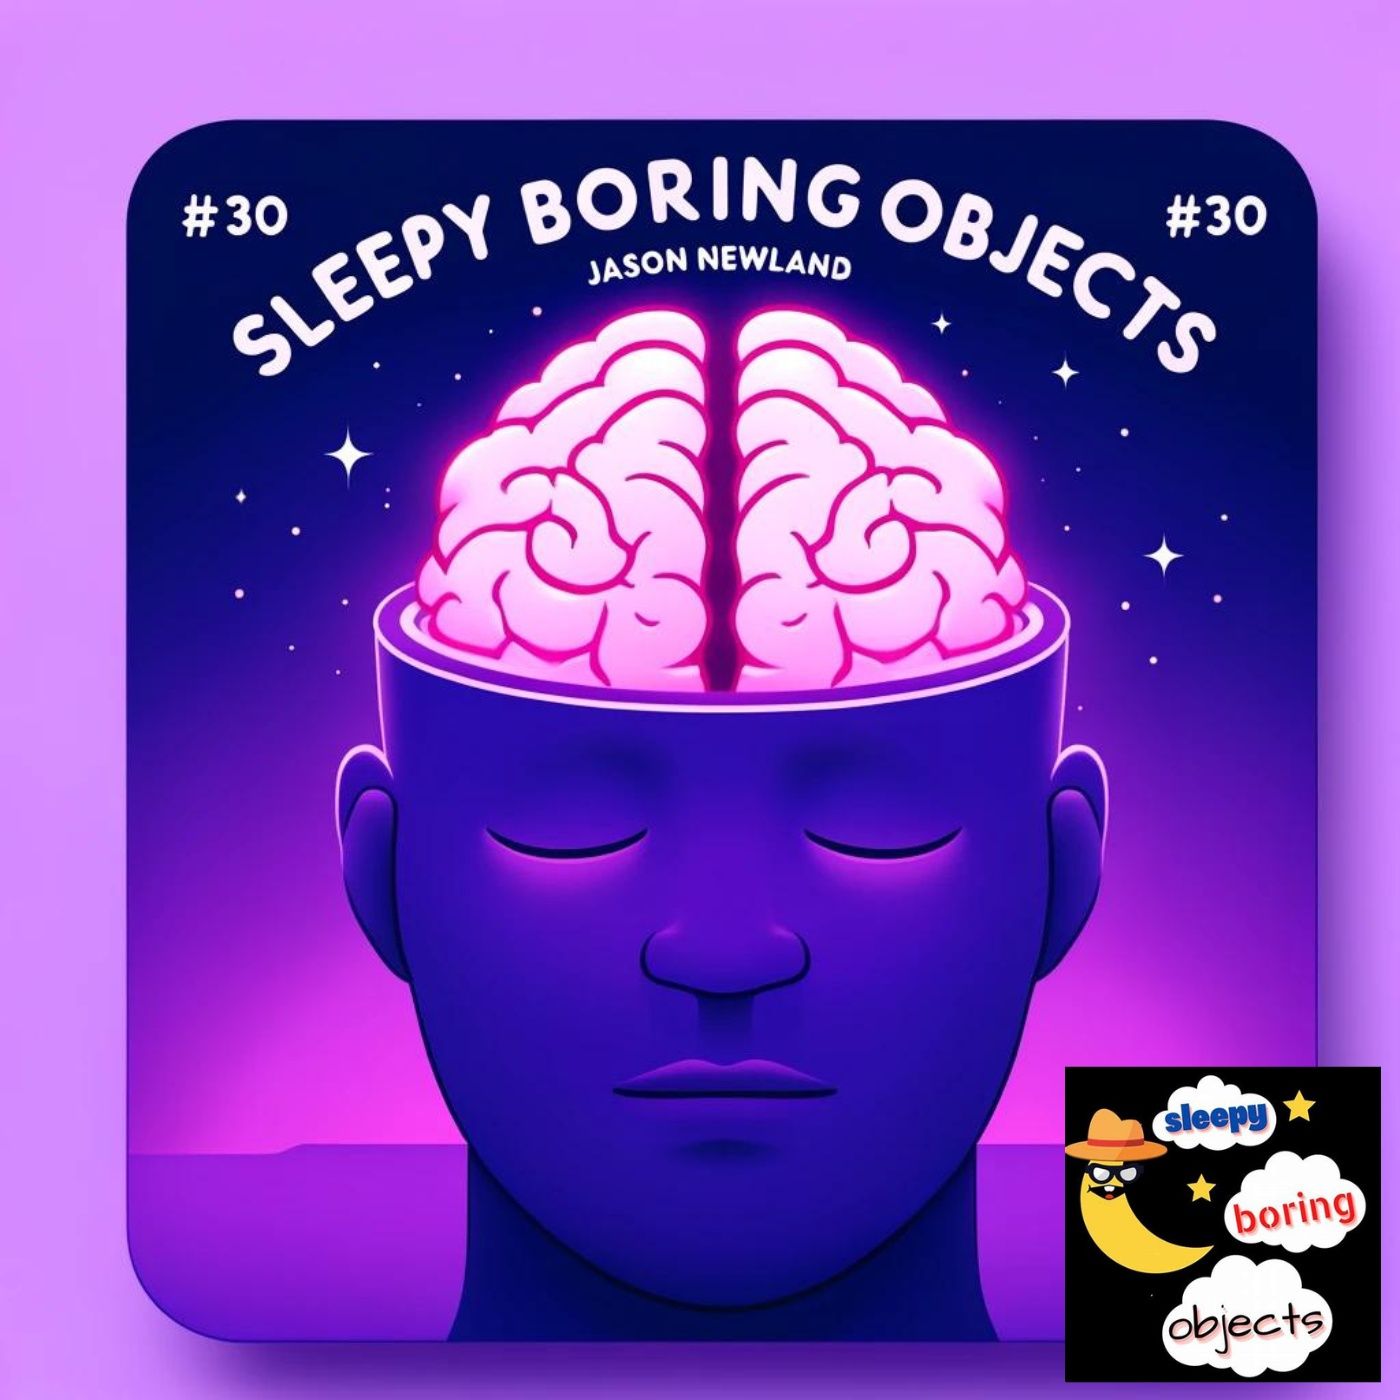 #30 NLP SLEEPY Boring Objects (Jason Newland) (24th September 2022)